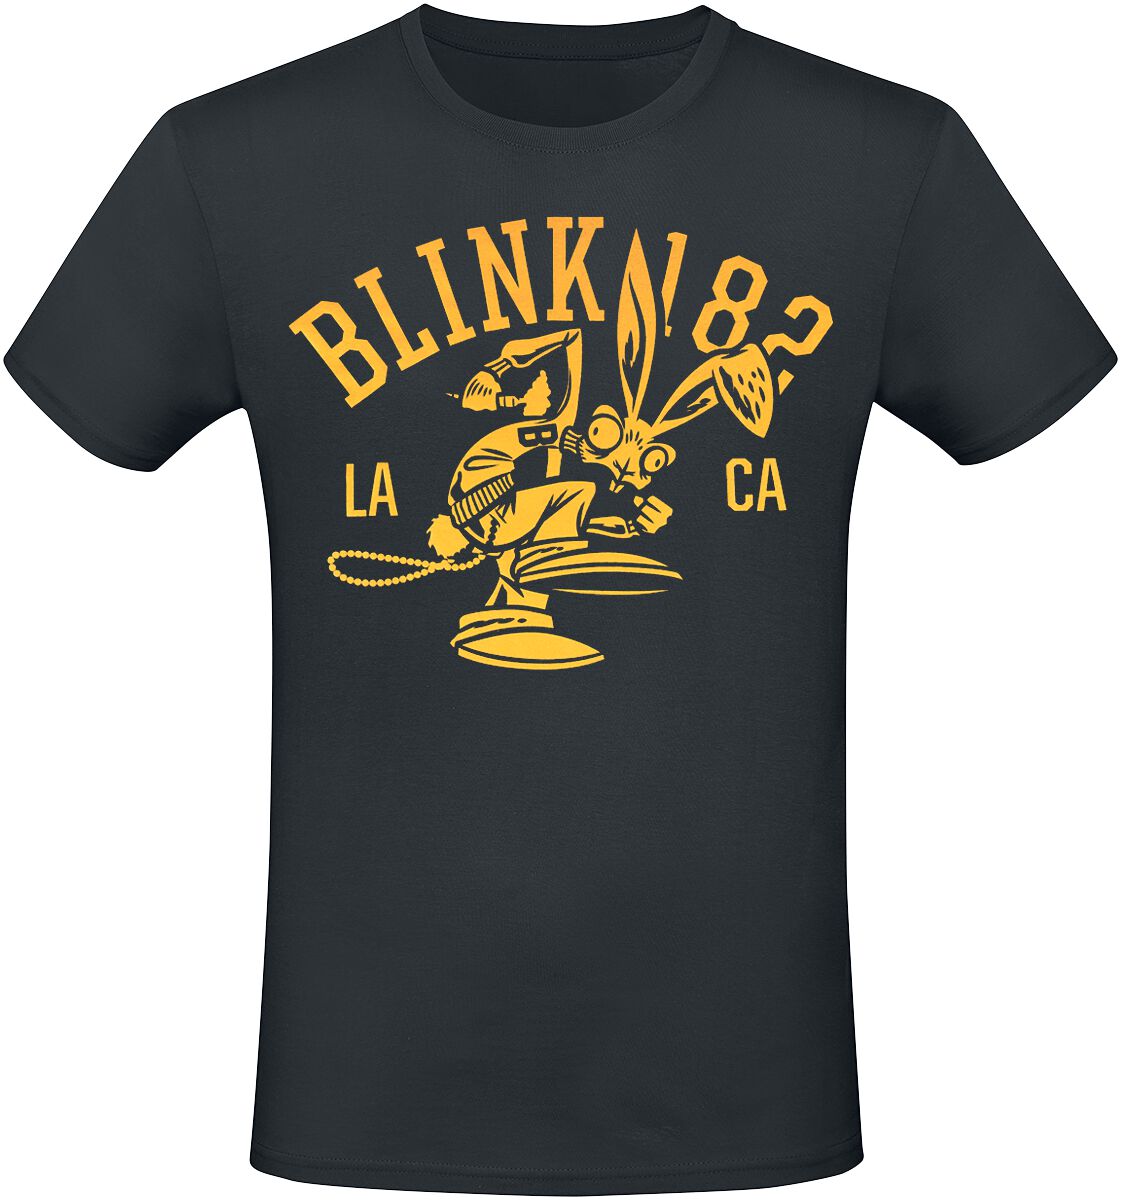 Blink-182 Mascot T-Shirt schwarz in M